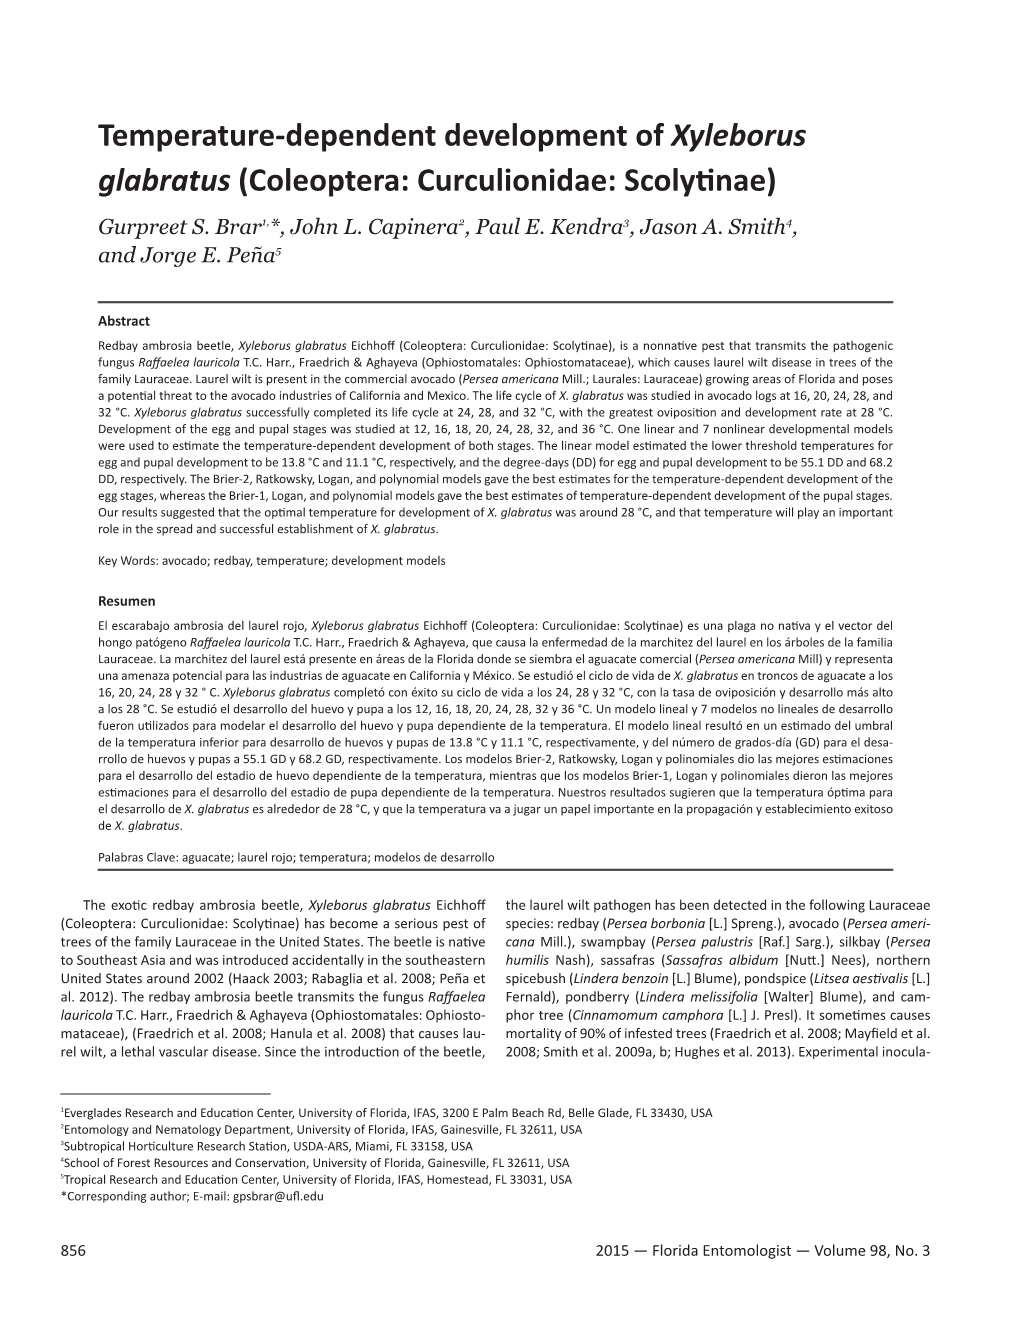 Temperature-Dependent Development of Xyleborus Glabratus (Coleoptera: Curculionidae: Scolytnae) Gurpreet S